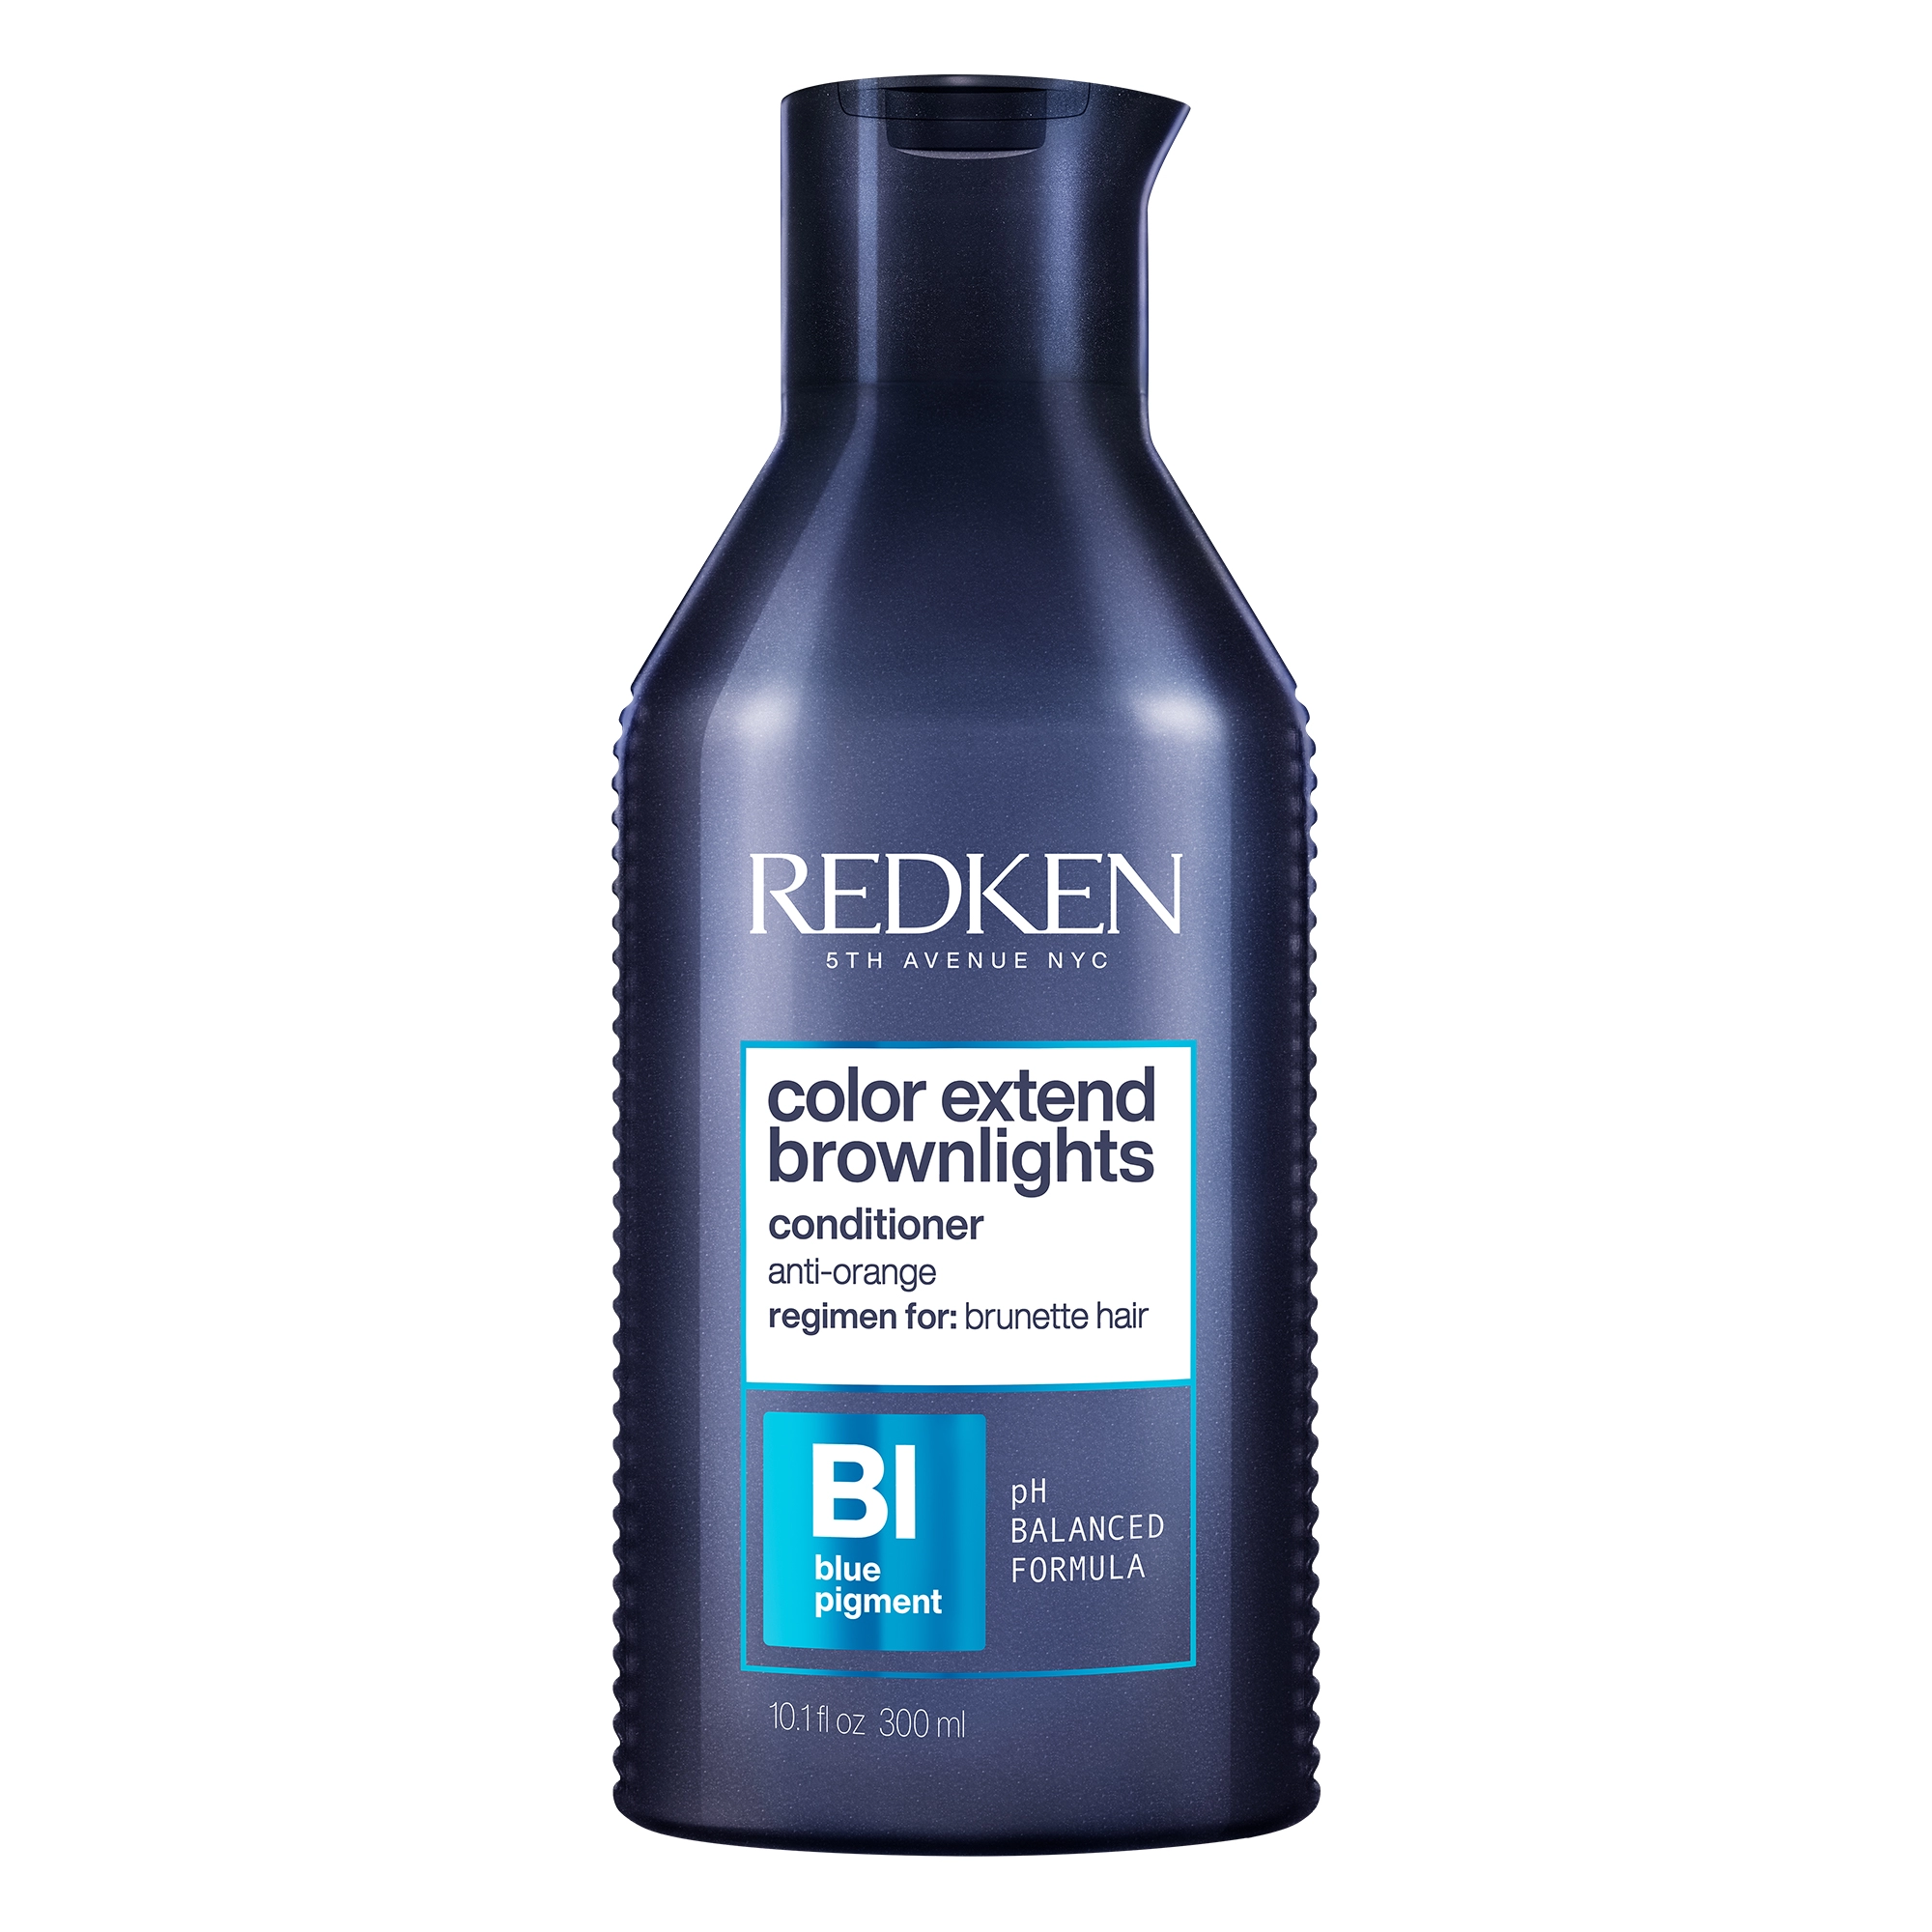 Redken-2020-Color-Extend-Brownlights-Conditioner-Product-Shot-2000×2000